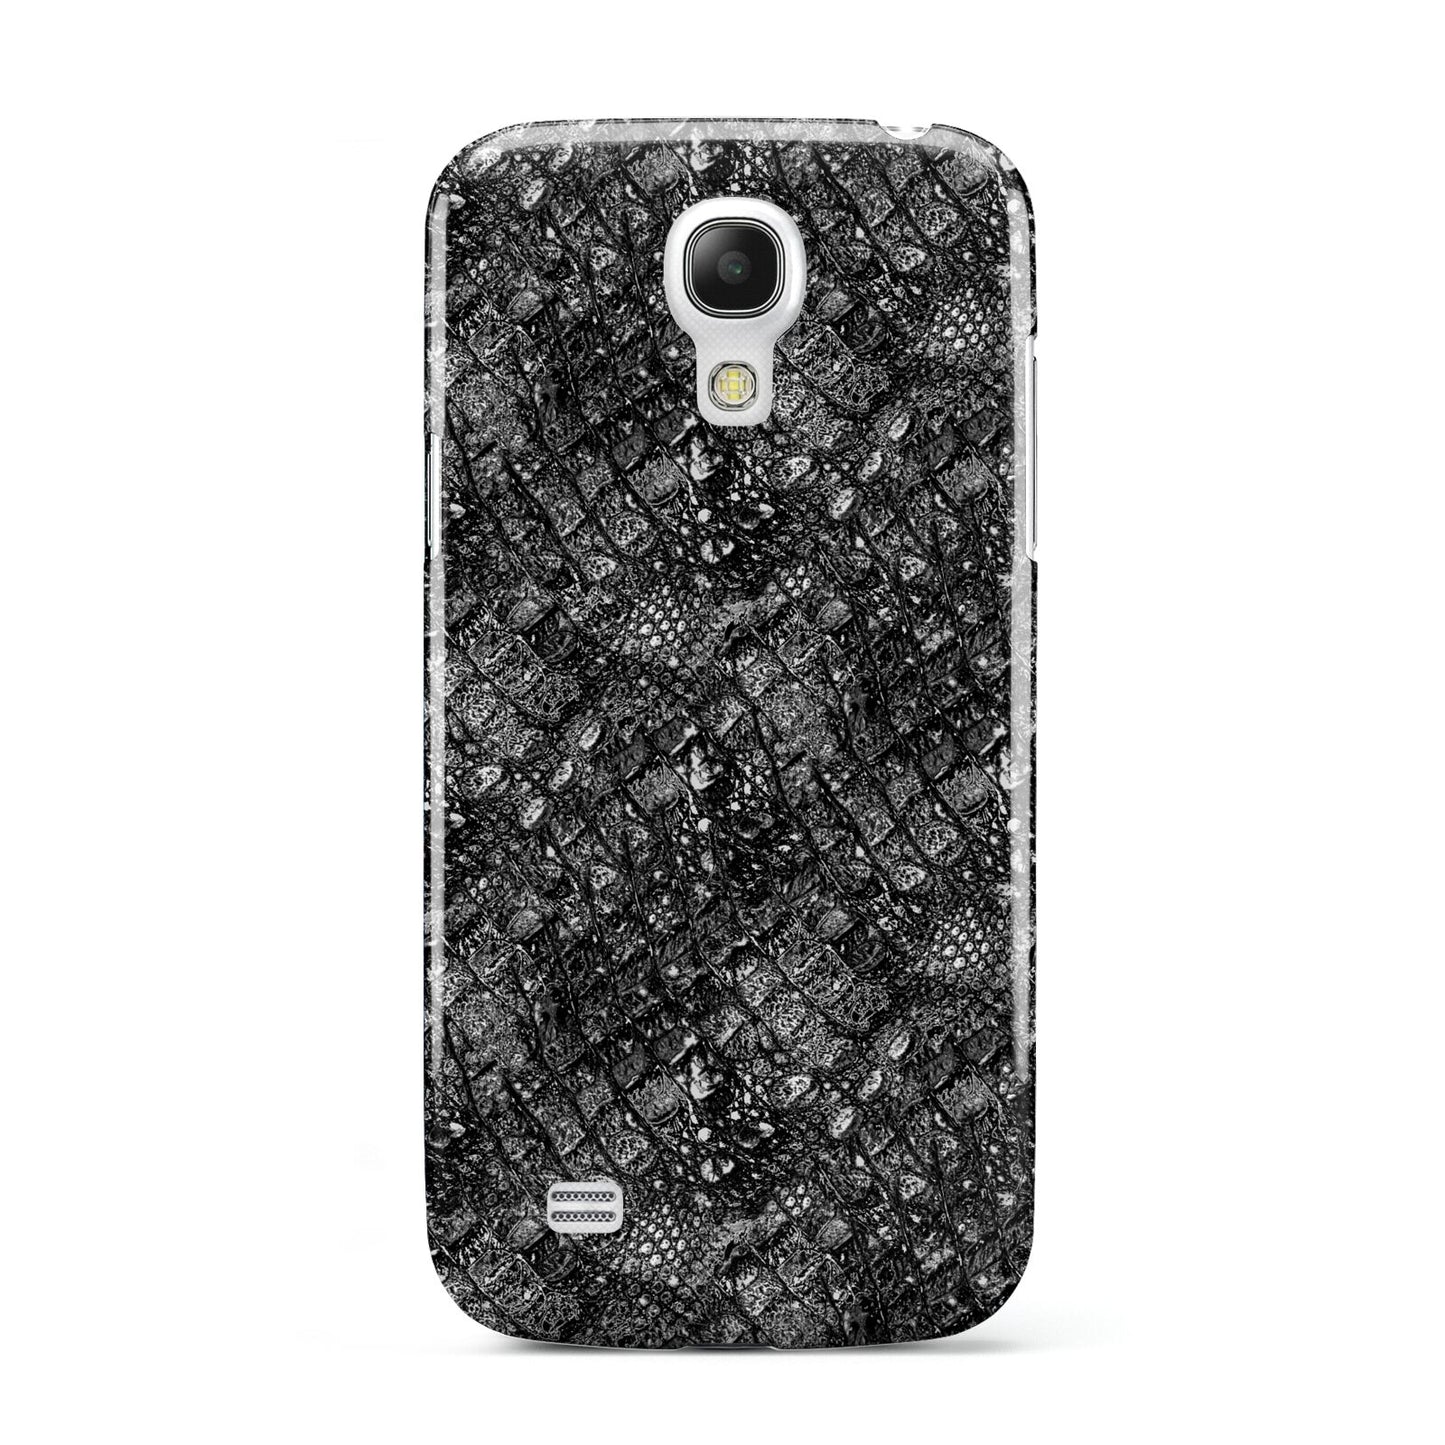 Snakeskin Design Samsung Galaxy S4 Mini Case